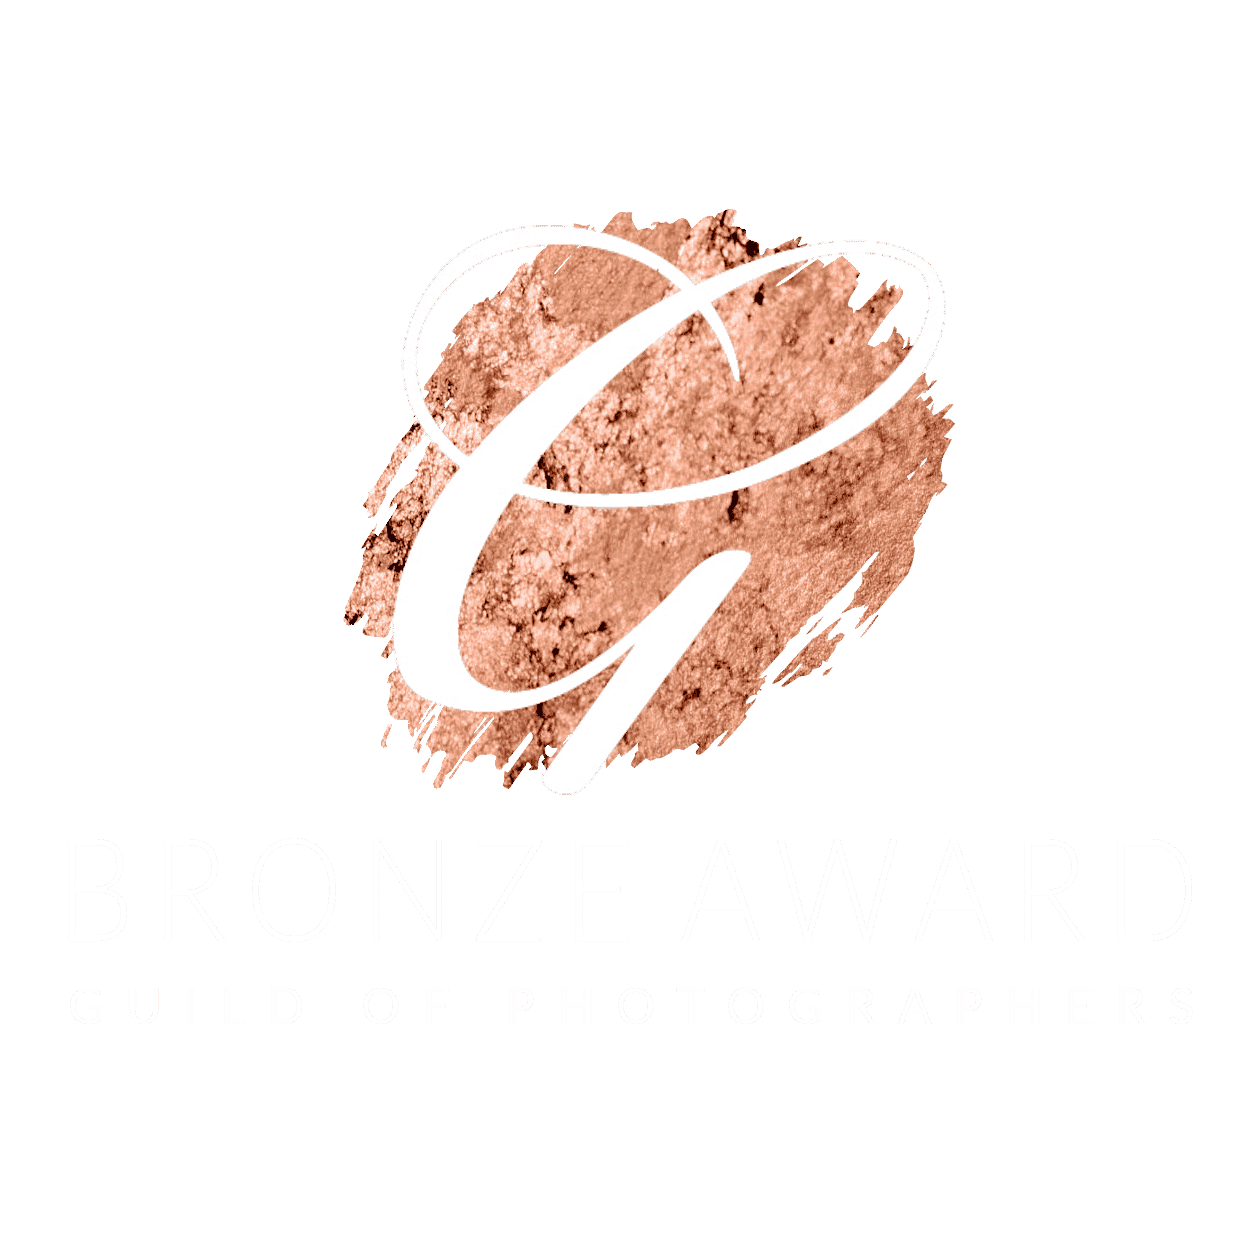 Guild of photographers bronze award